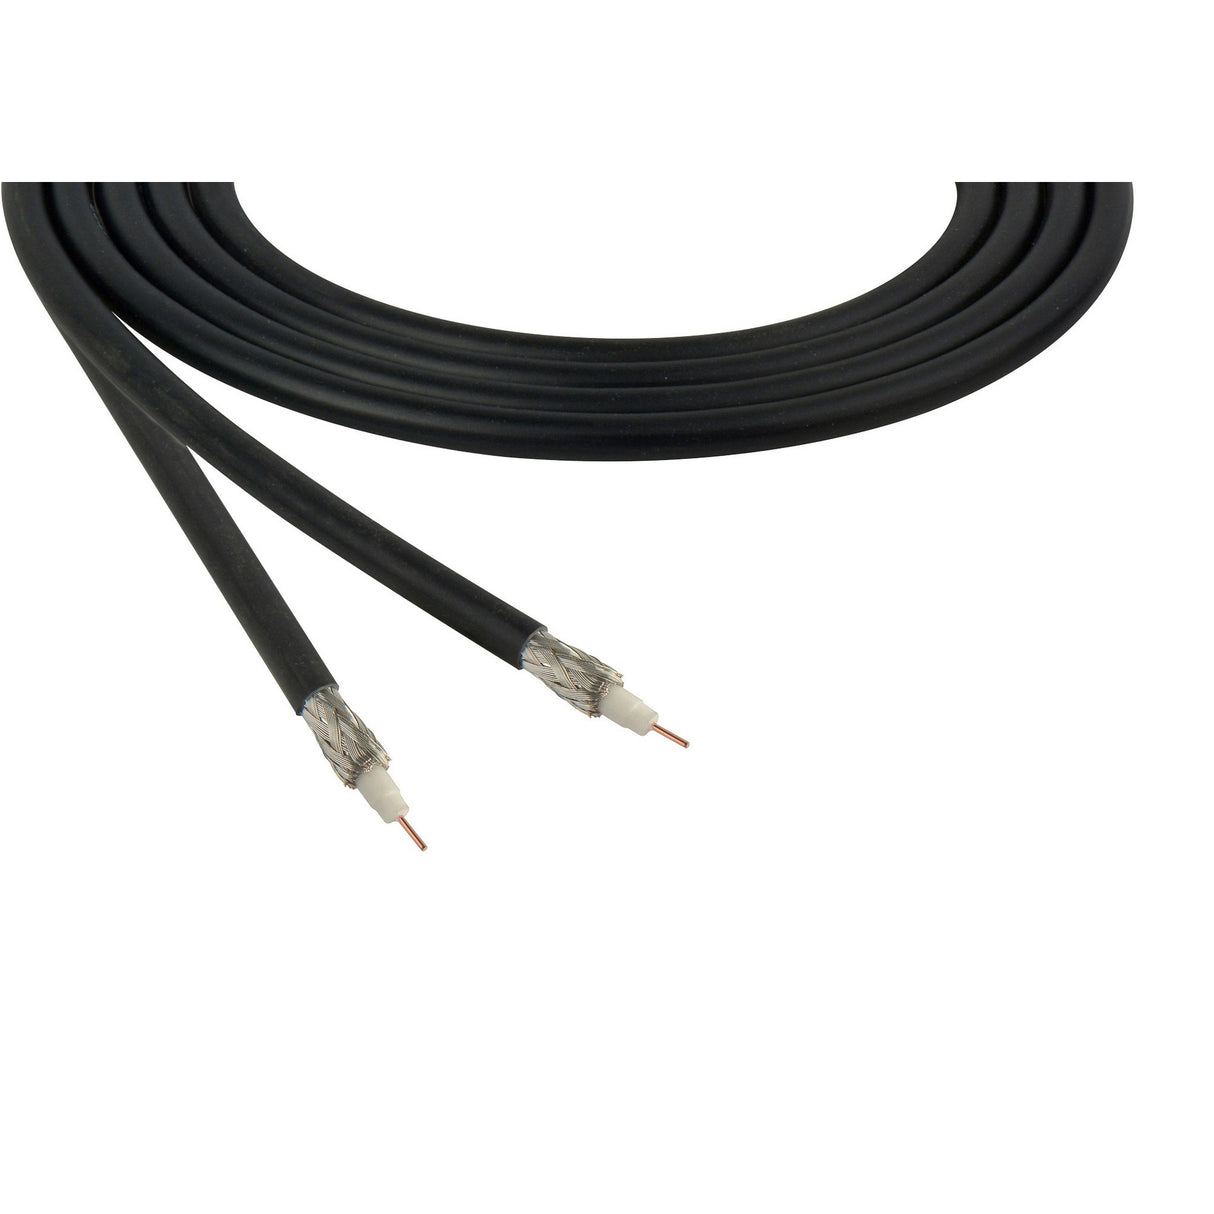 Belden 1855A 6G-SDI Mini-RG59 Digital Coax Video Cable 23 AWG, Black, 1000-Feet